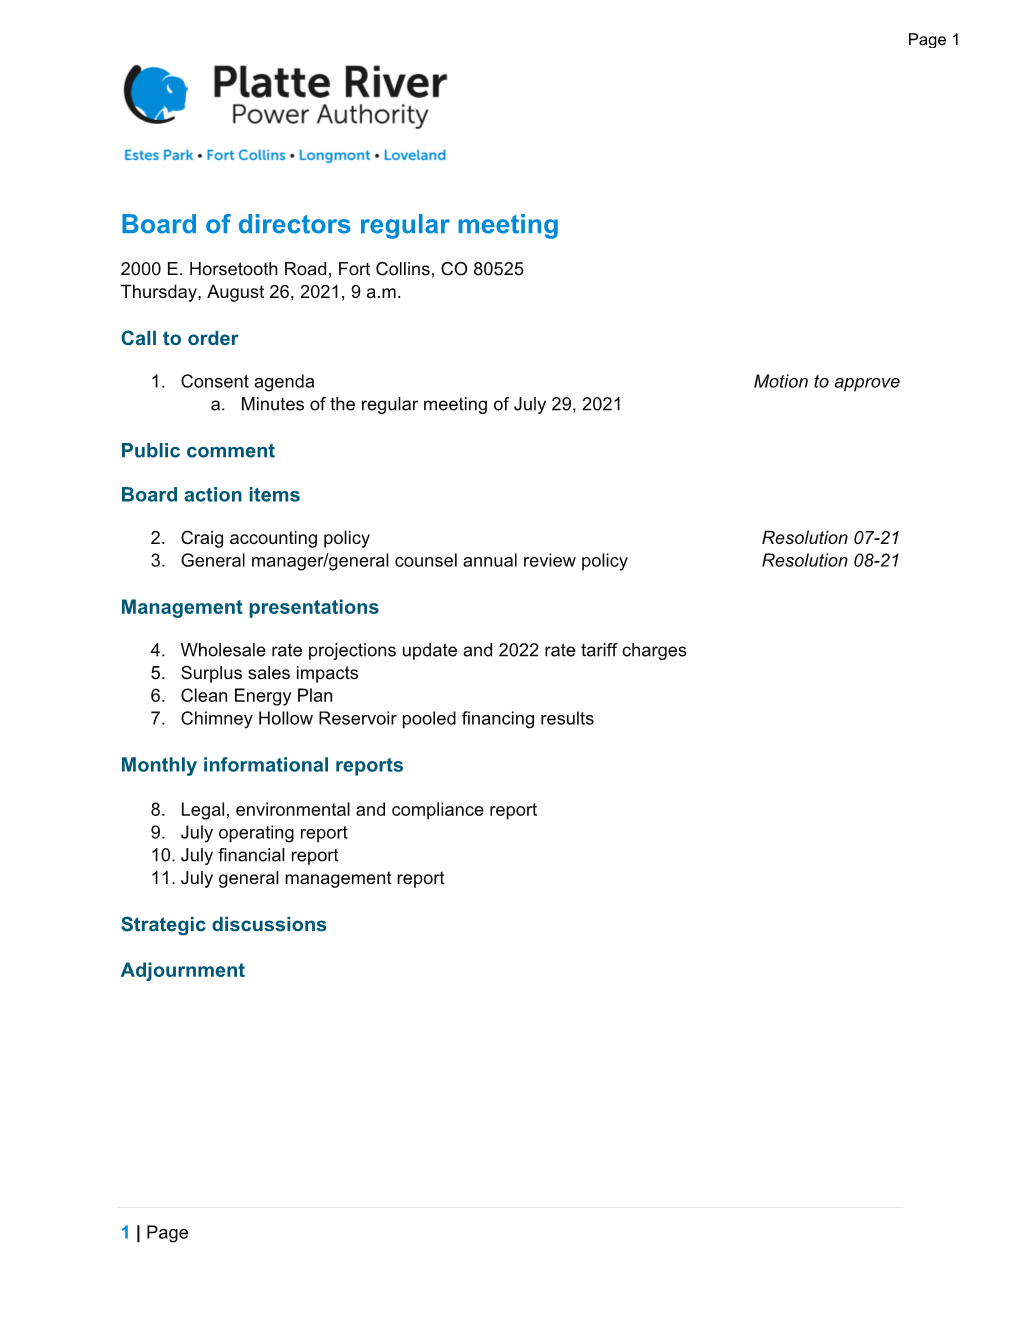 Board of Directors Regular Meeting